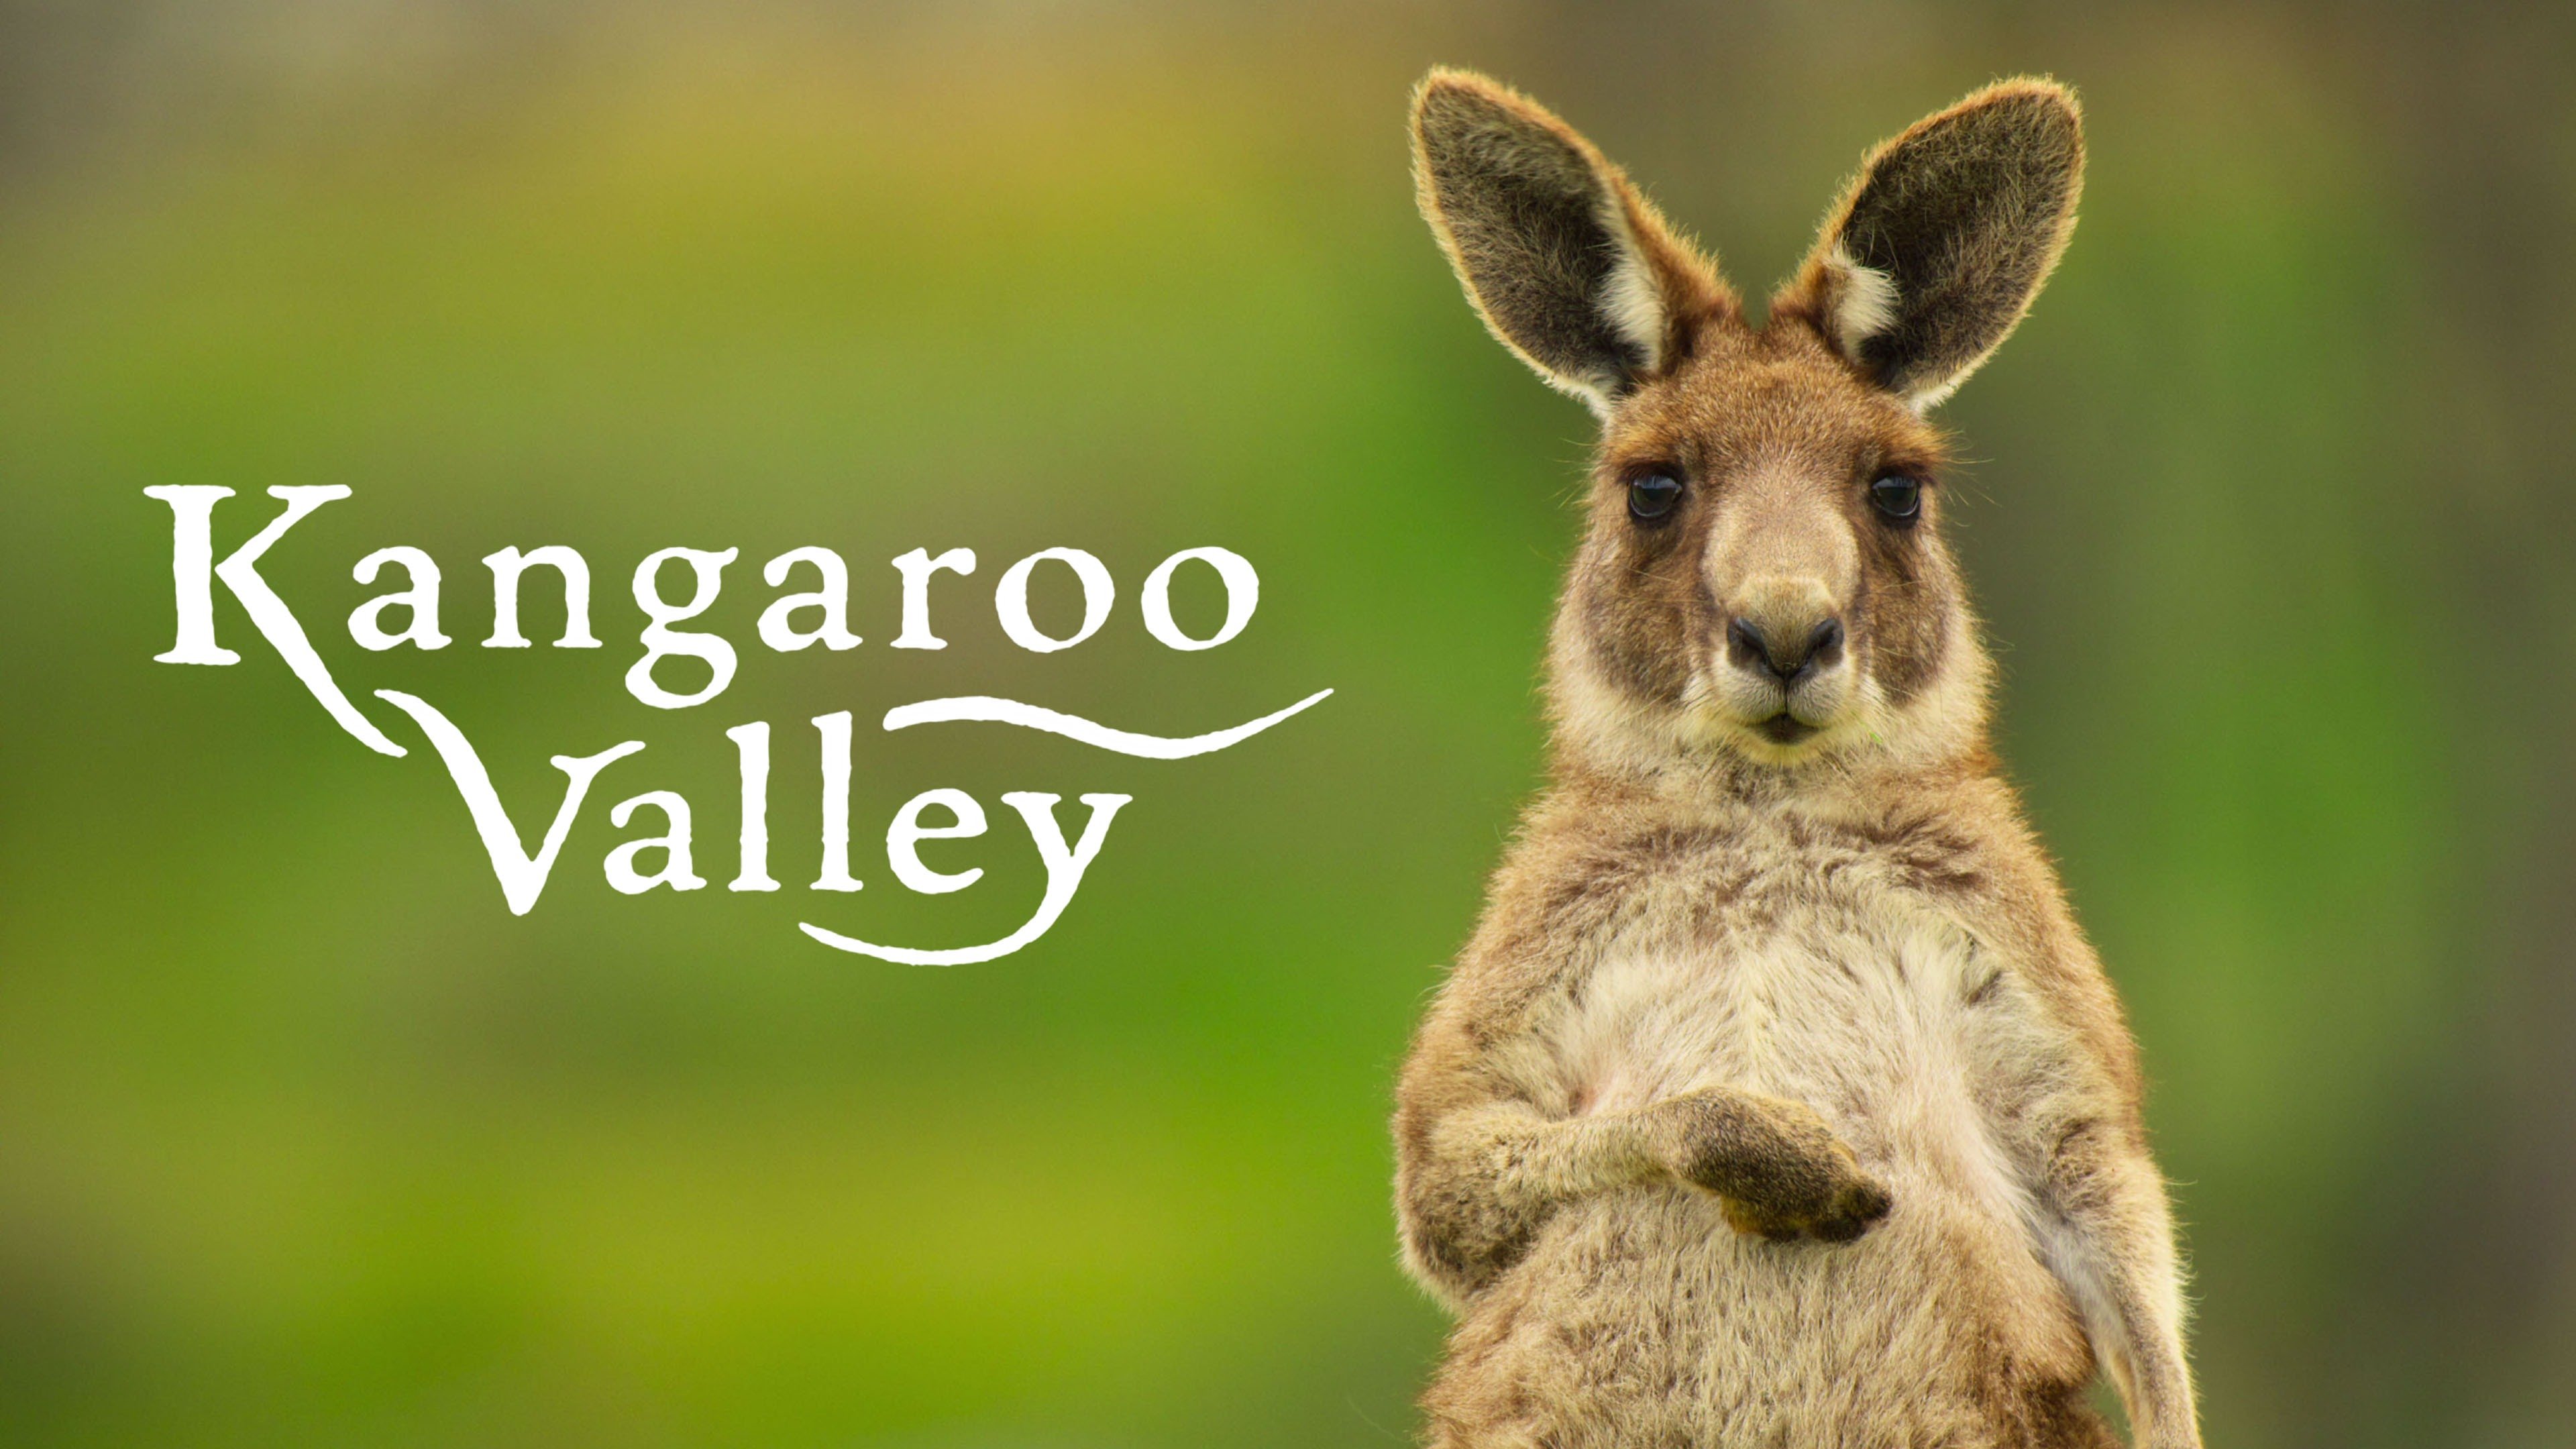 Kangaroo Valley - Netflix Documentary